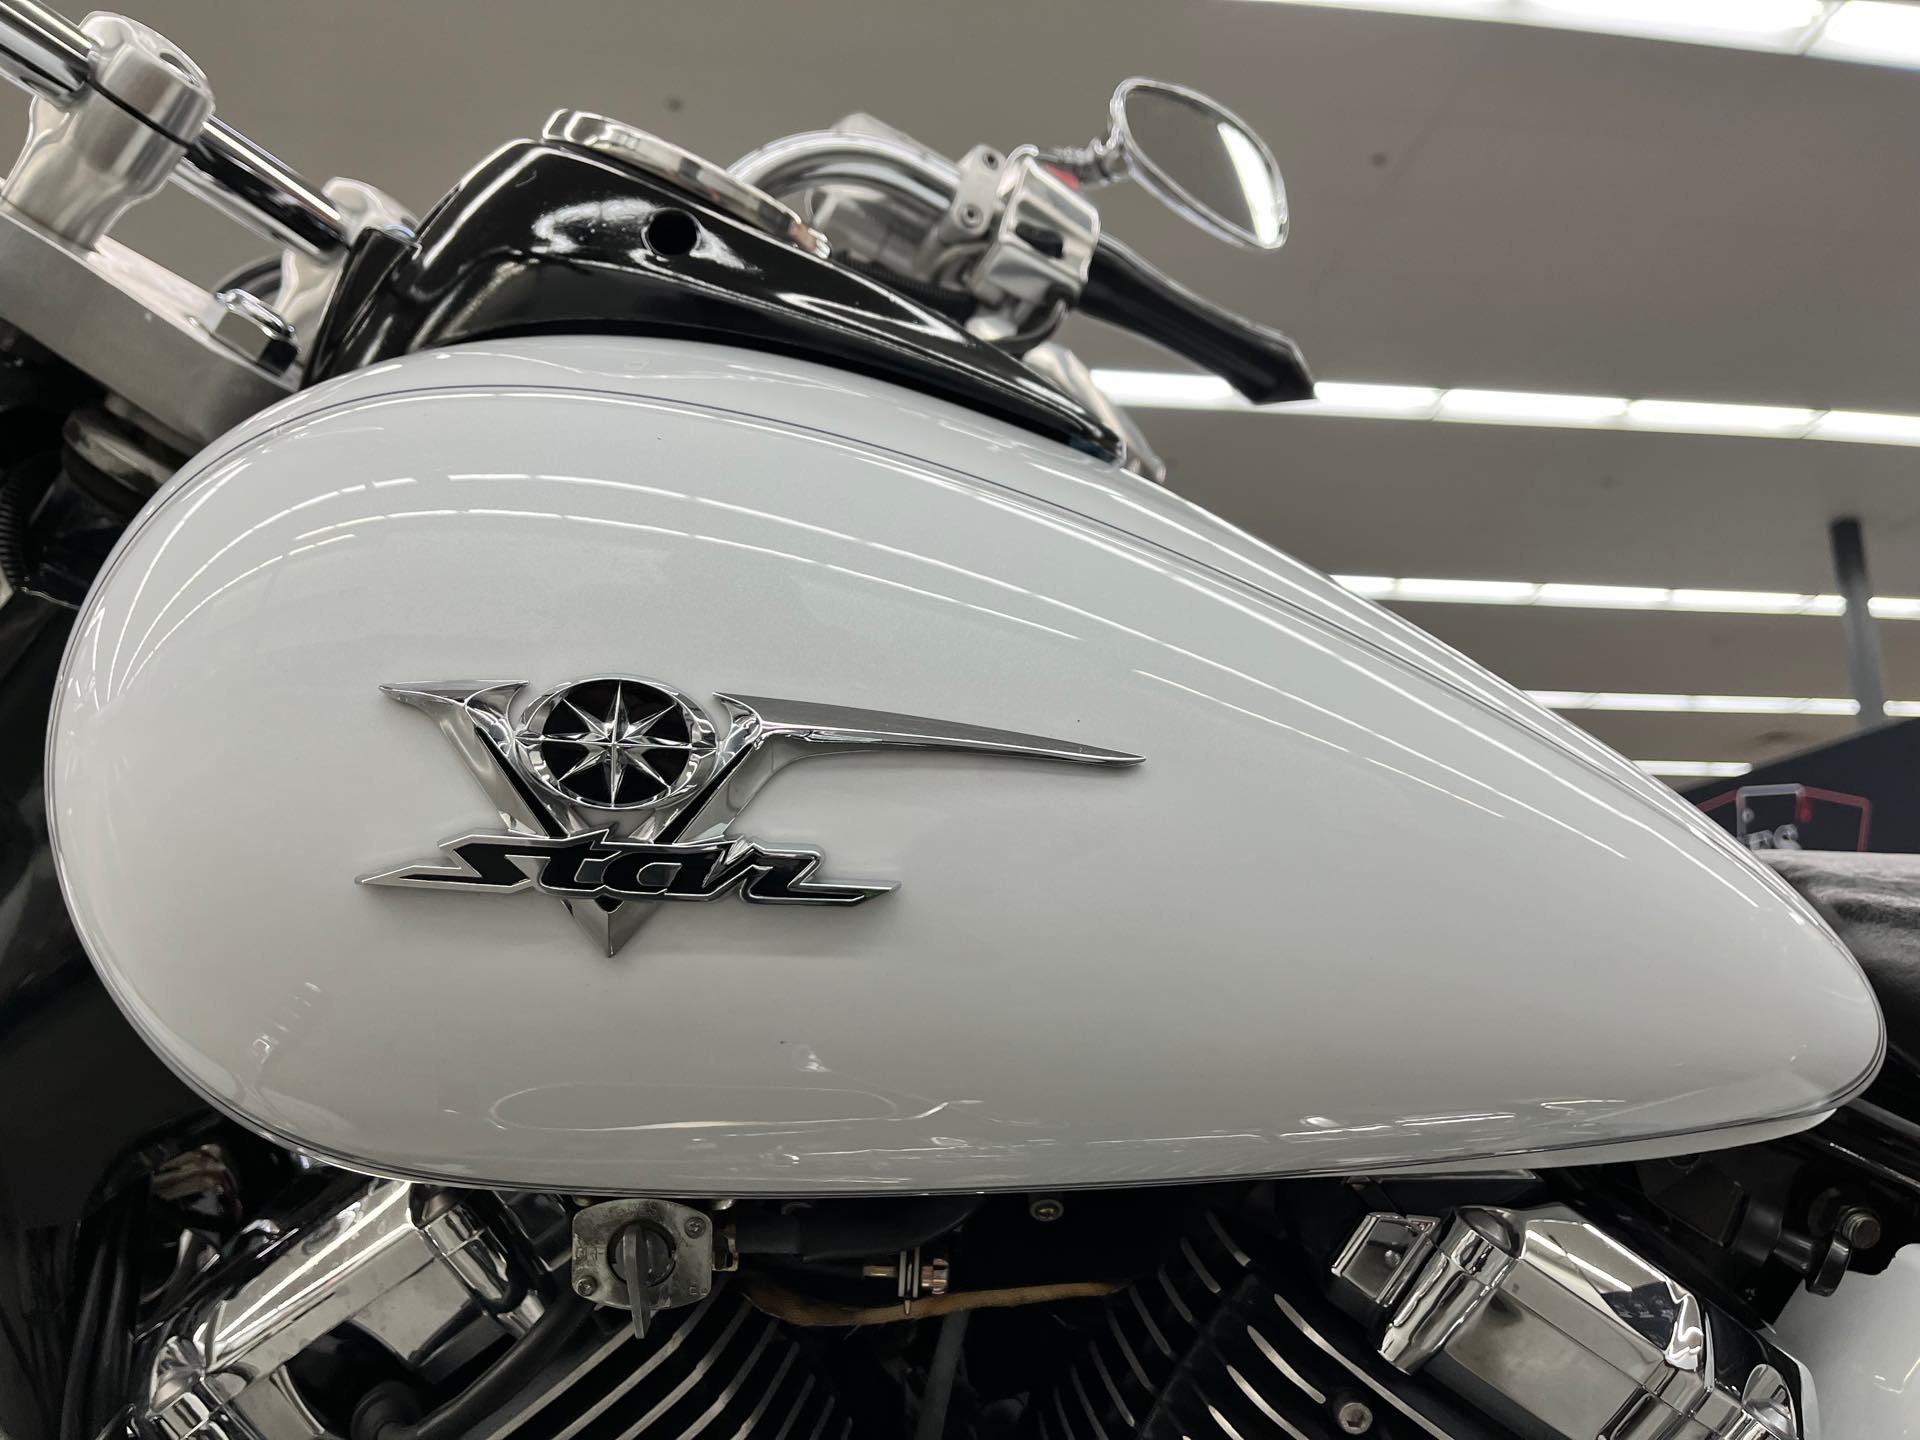 2004 Yamaha V Star Custom at Aces Motorcycles - Denver